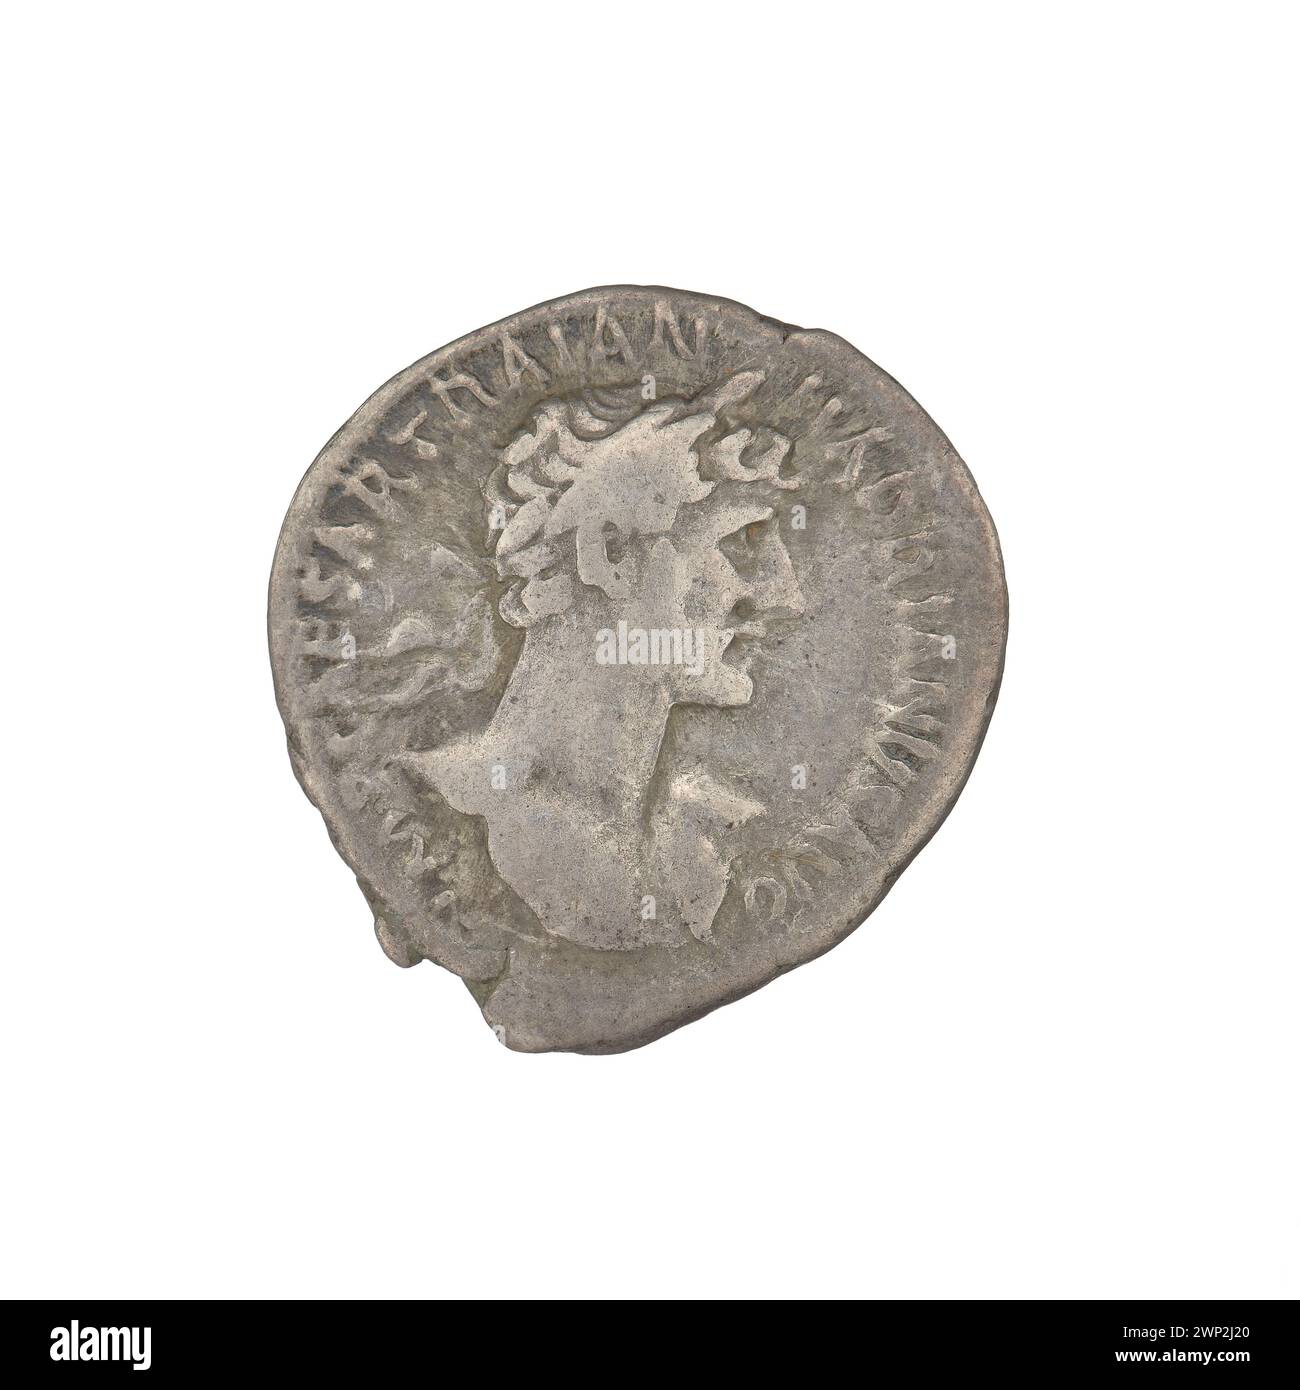 denarius; Hadrian (76-138; Roman emperor 117-138); 118 (114-00-00-117-00-00);Fortuna (personification), heads, reins, laurel wreaths Stock Photo